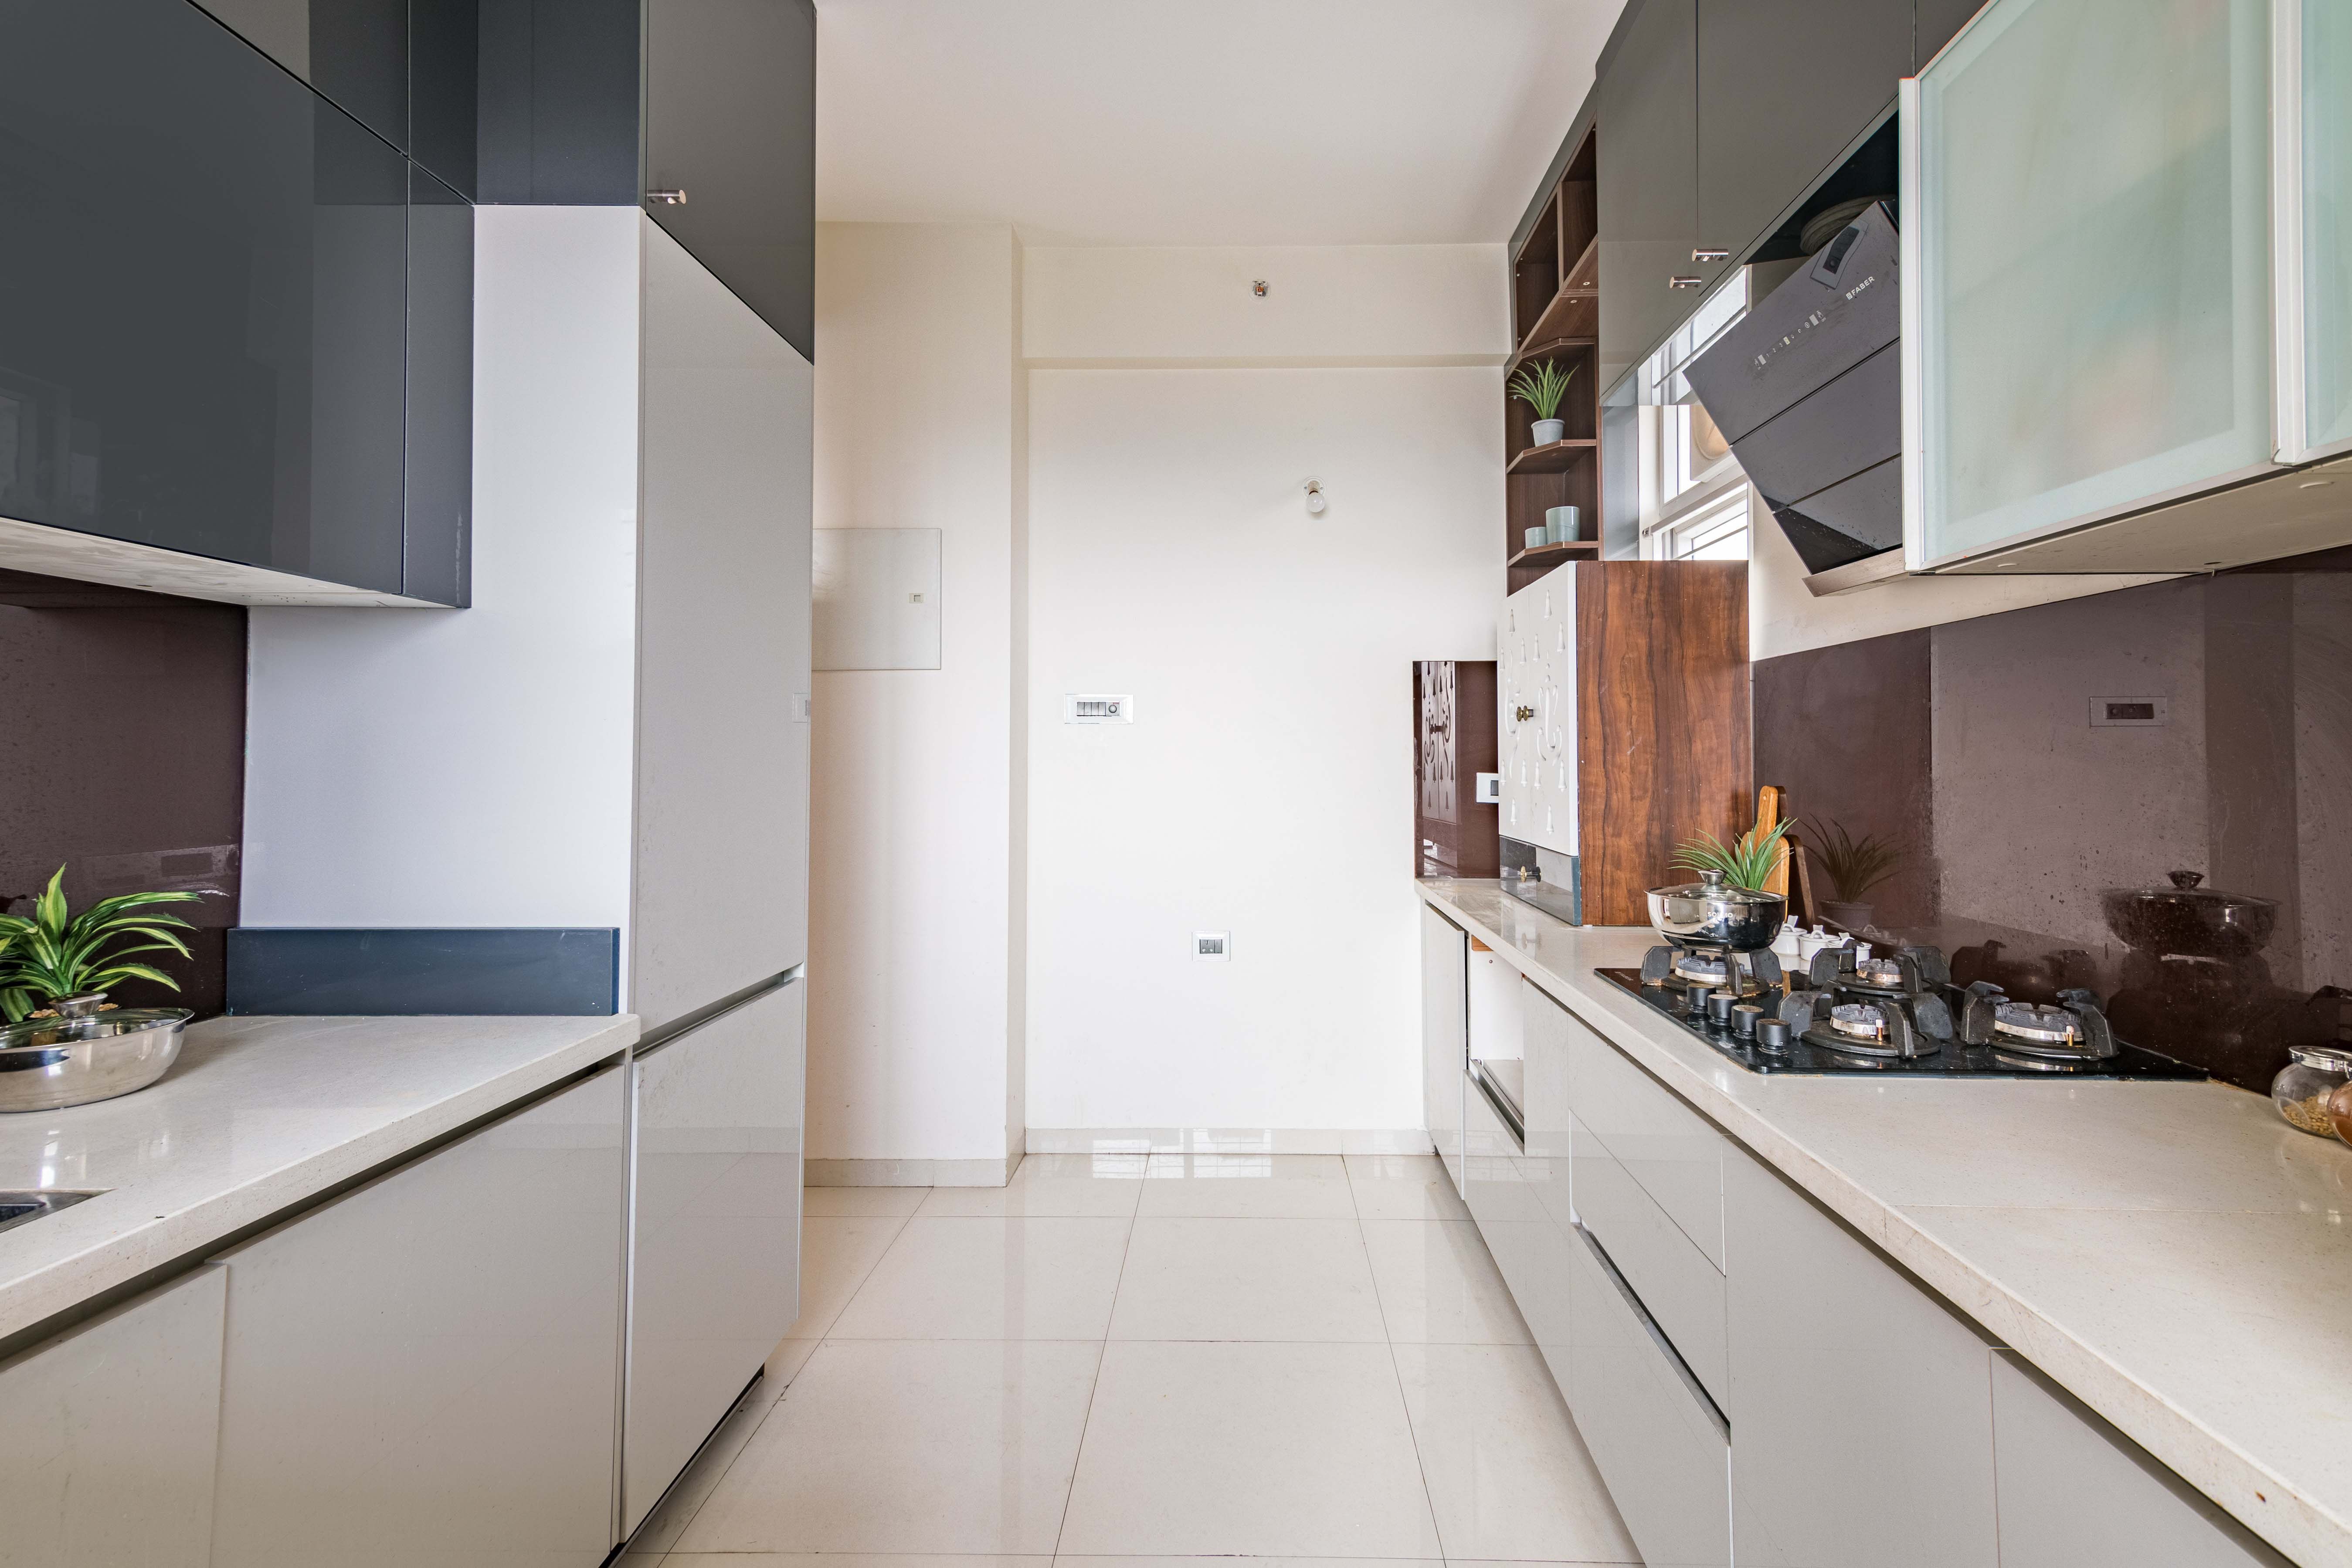 Modern Parallel Kitchen Design With Closed Storage Cabinets